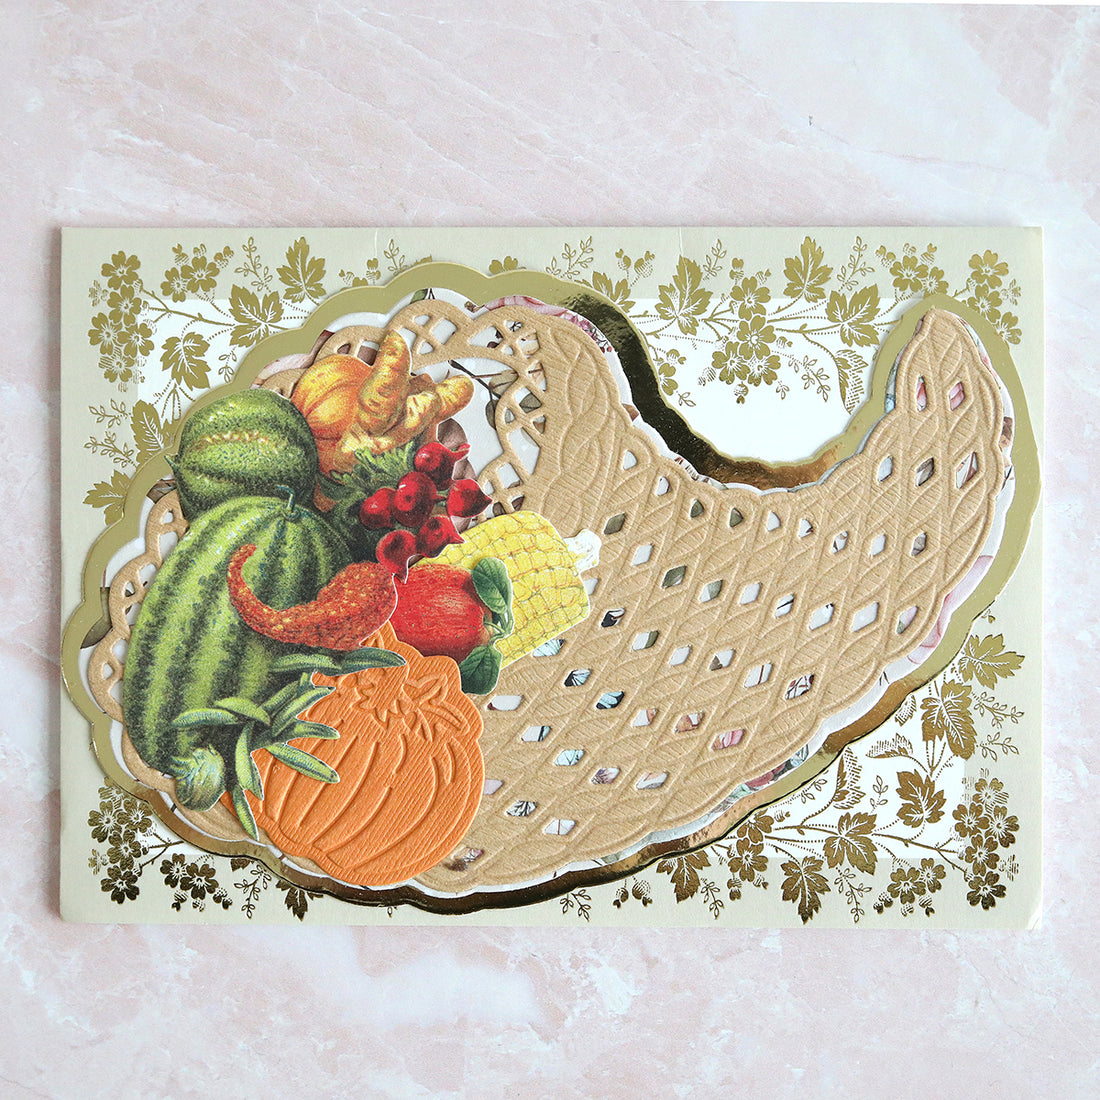 Cornucopia card with vegetables